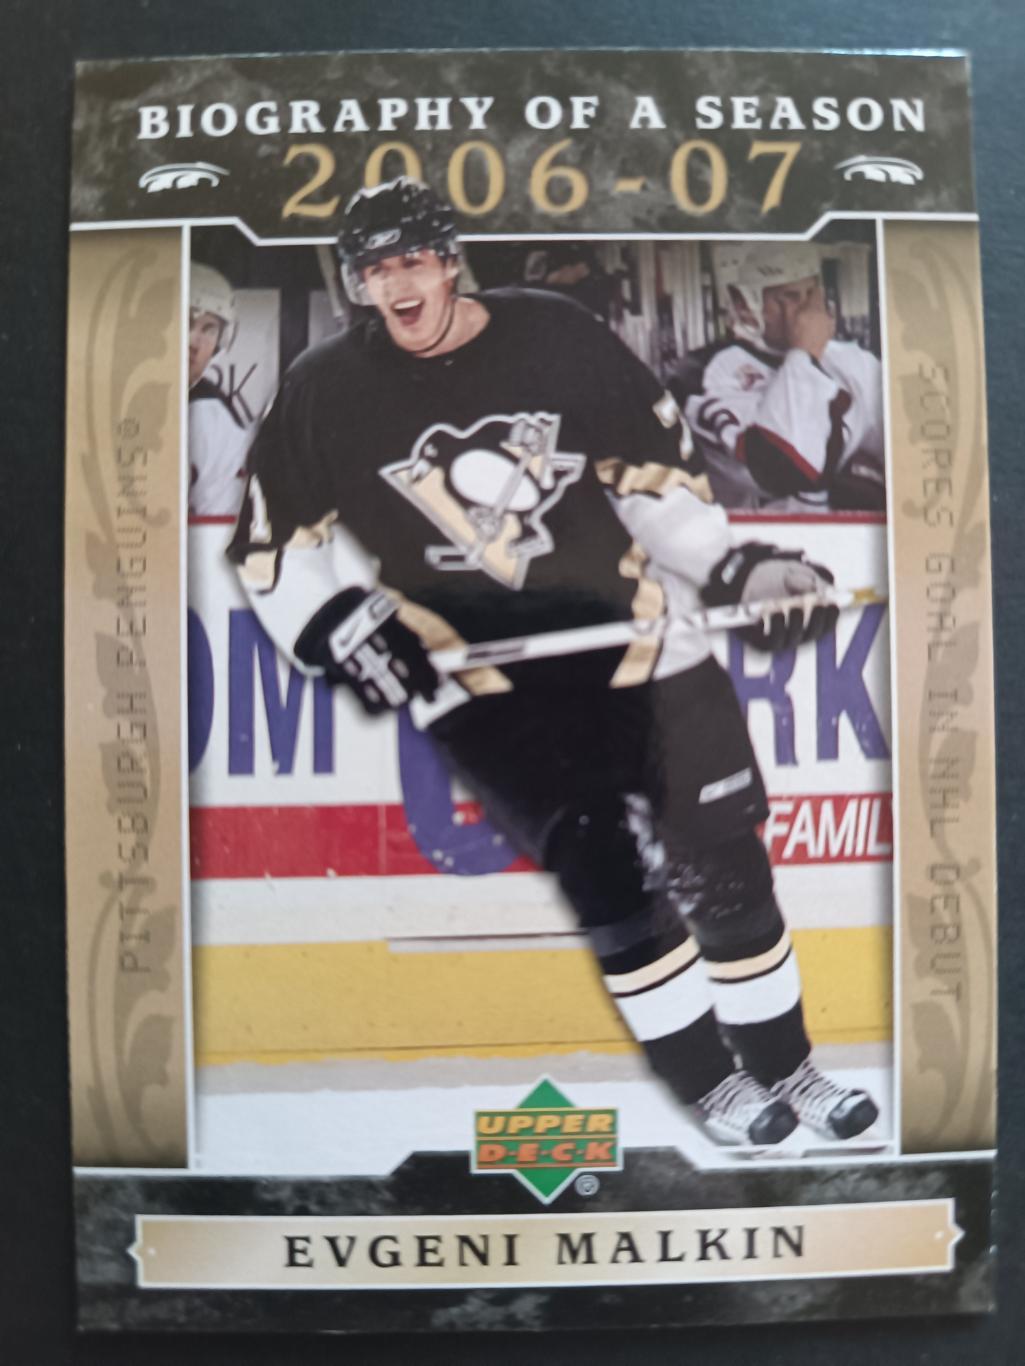 ХОККЕЙ КАРТОЧКА НХЛ UPPER DECK 2006-07 NHL BIOGRAPHY OF SEASON EVGENI MALKIN #4